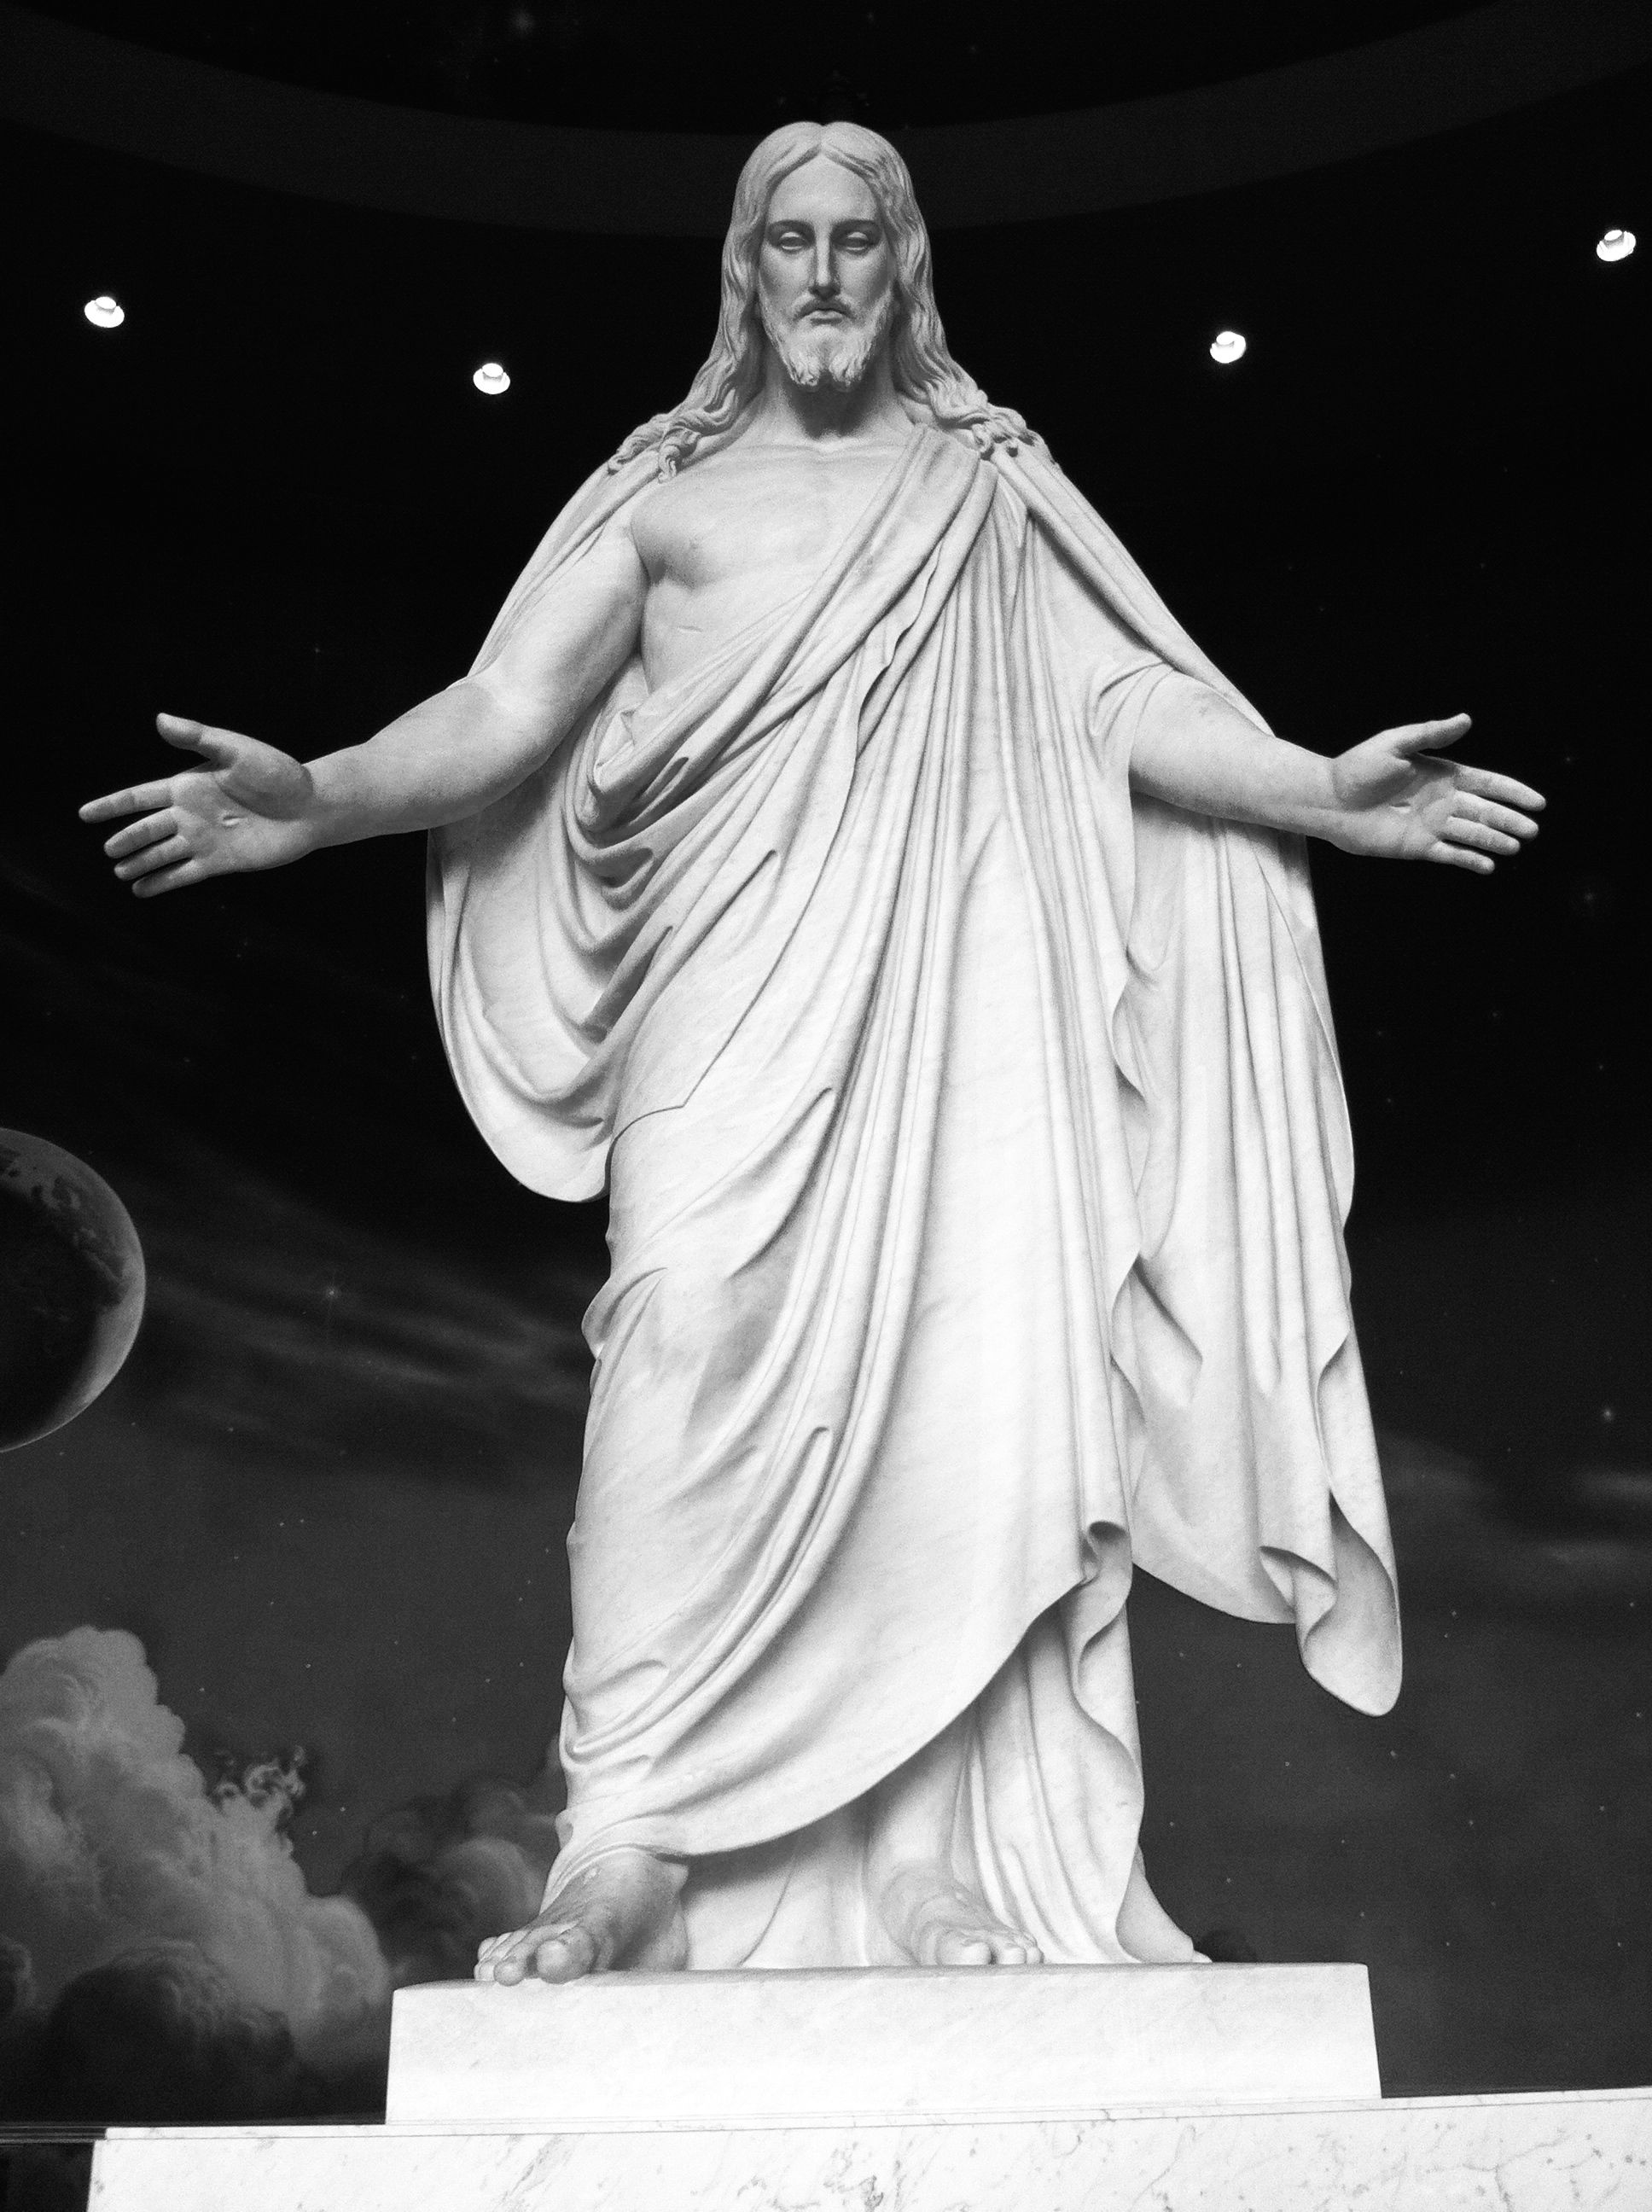 Jesus sculpture photo